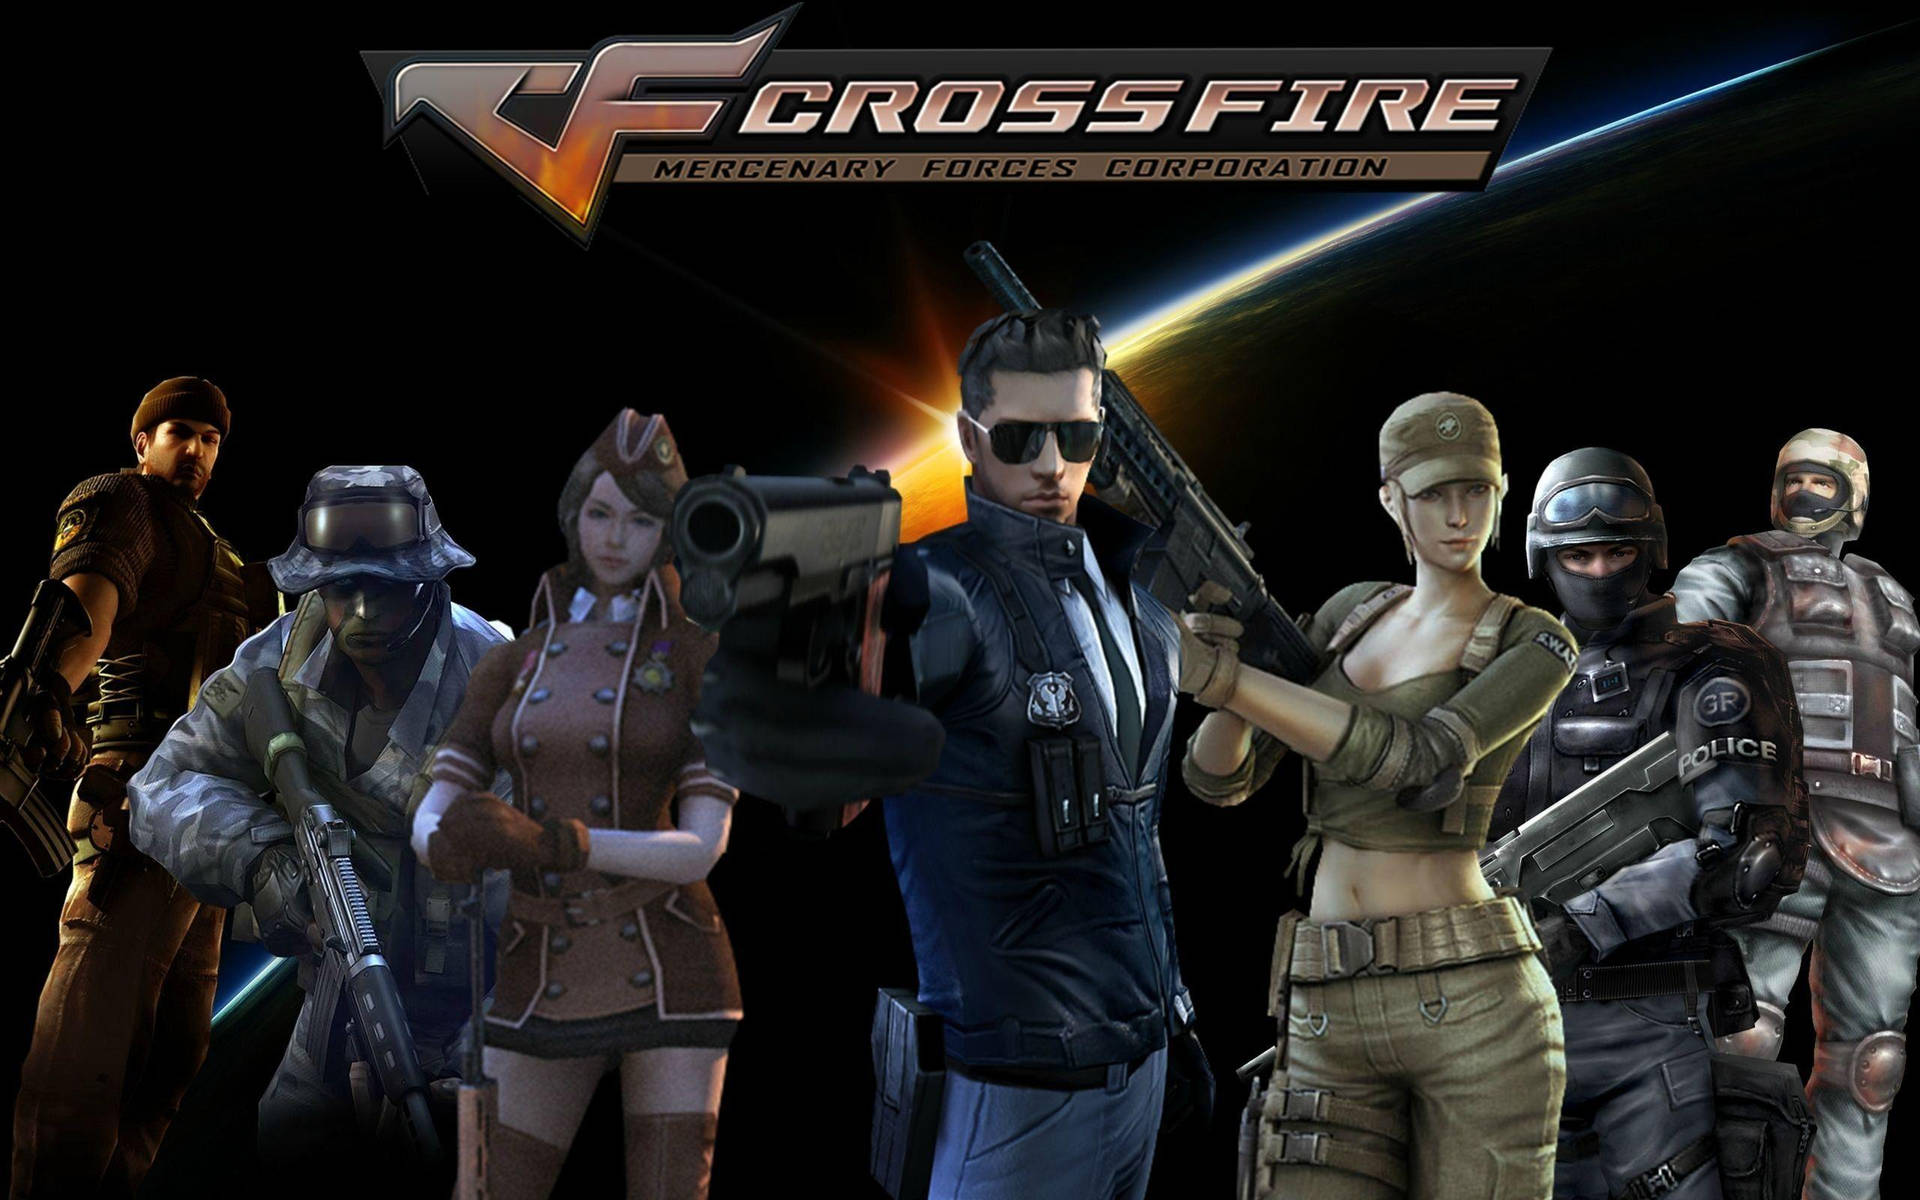 Crossfire Mercenary Forces Corporation Background